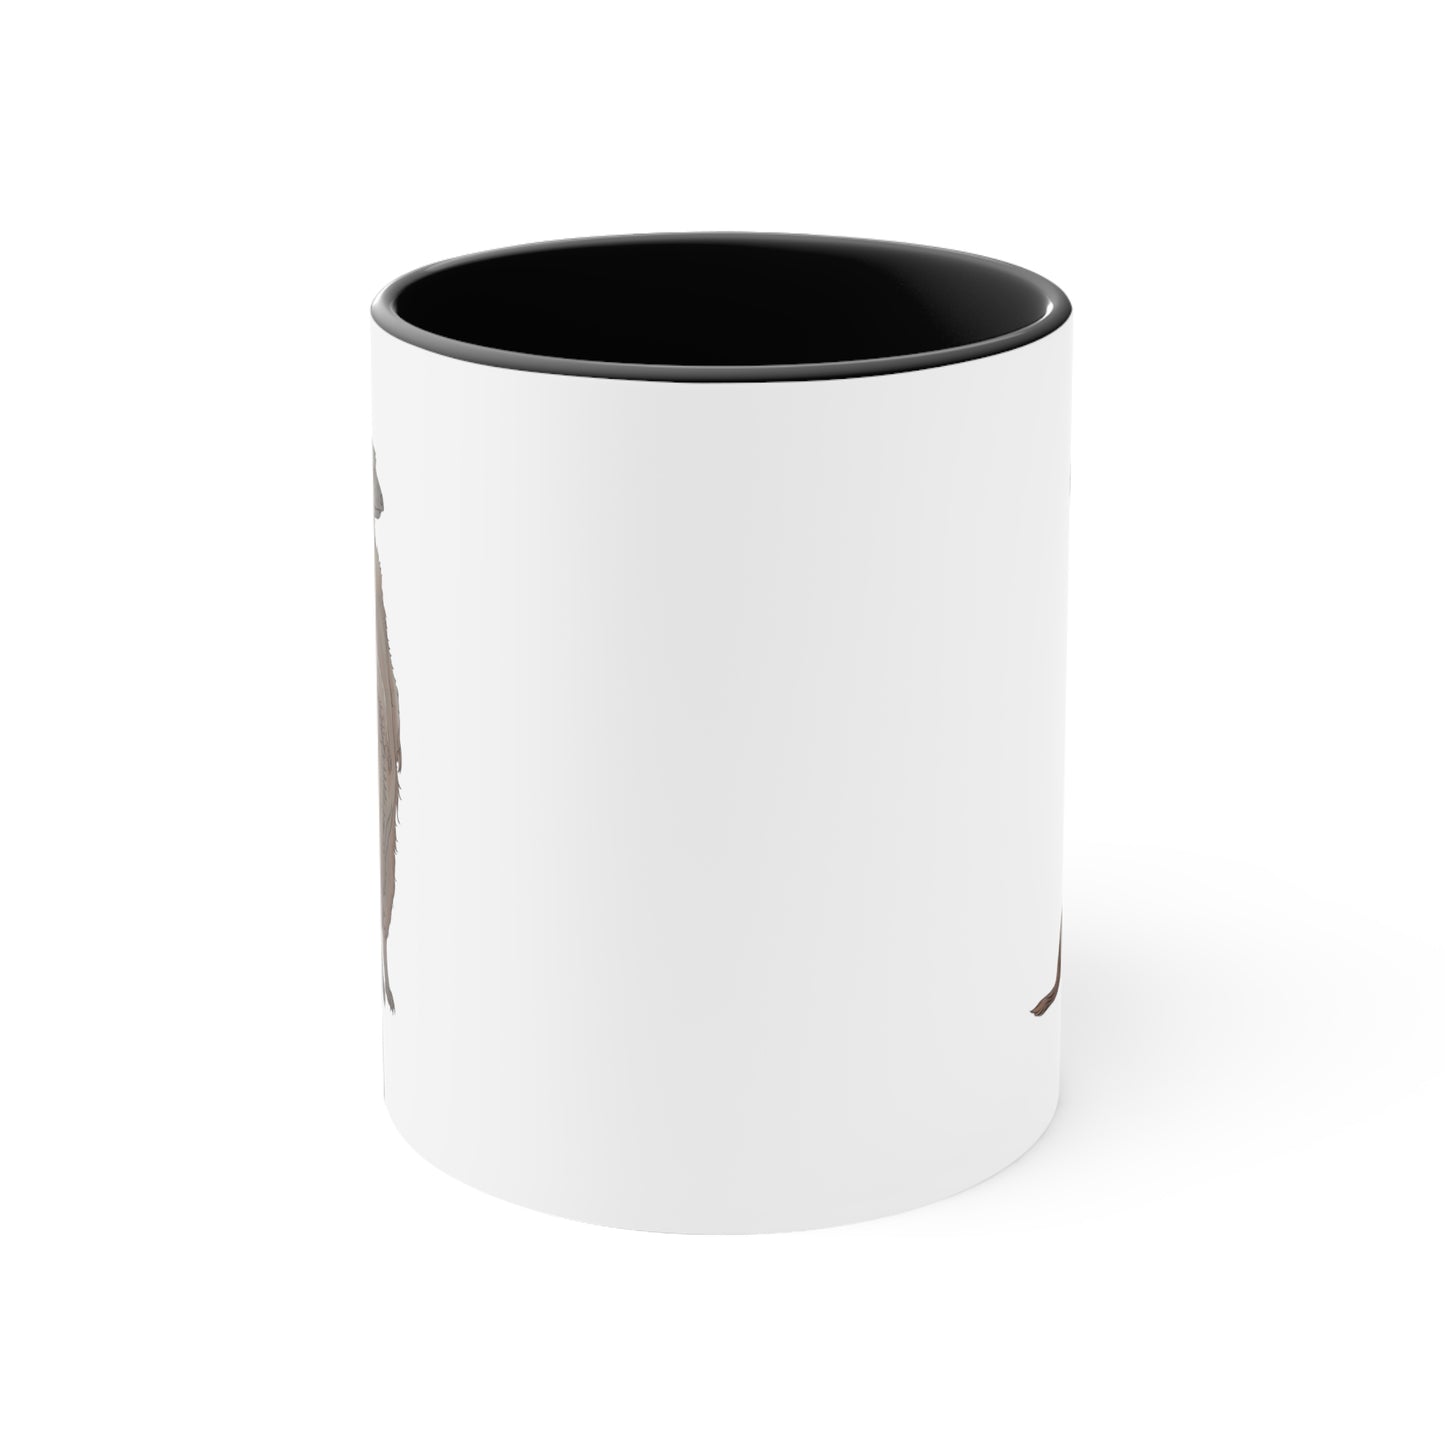 Meerkat Coffee Mug - Double Sided Black Accent White Ceramic 11oz by TheGlassyLass.com